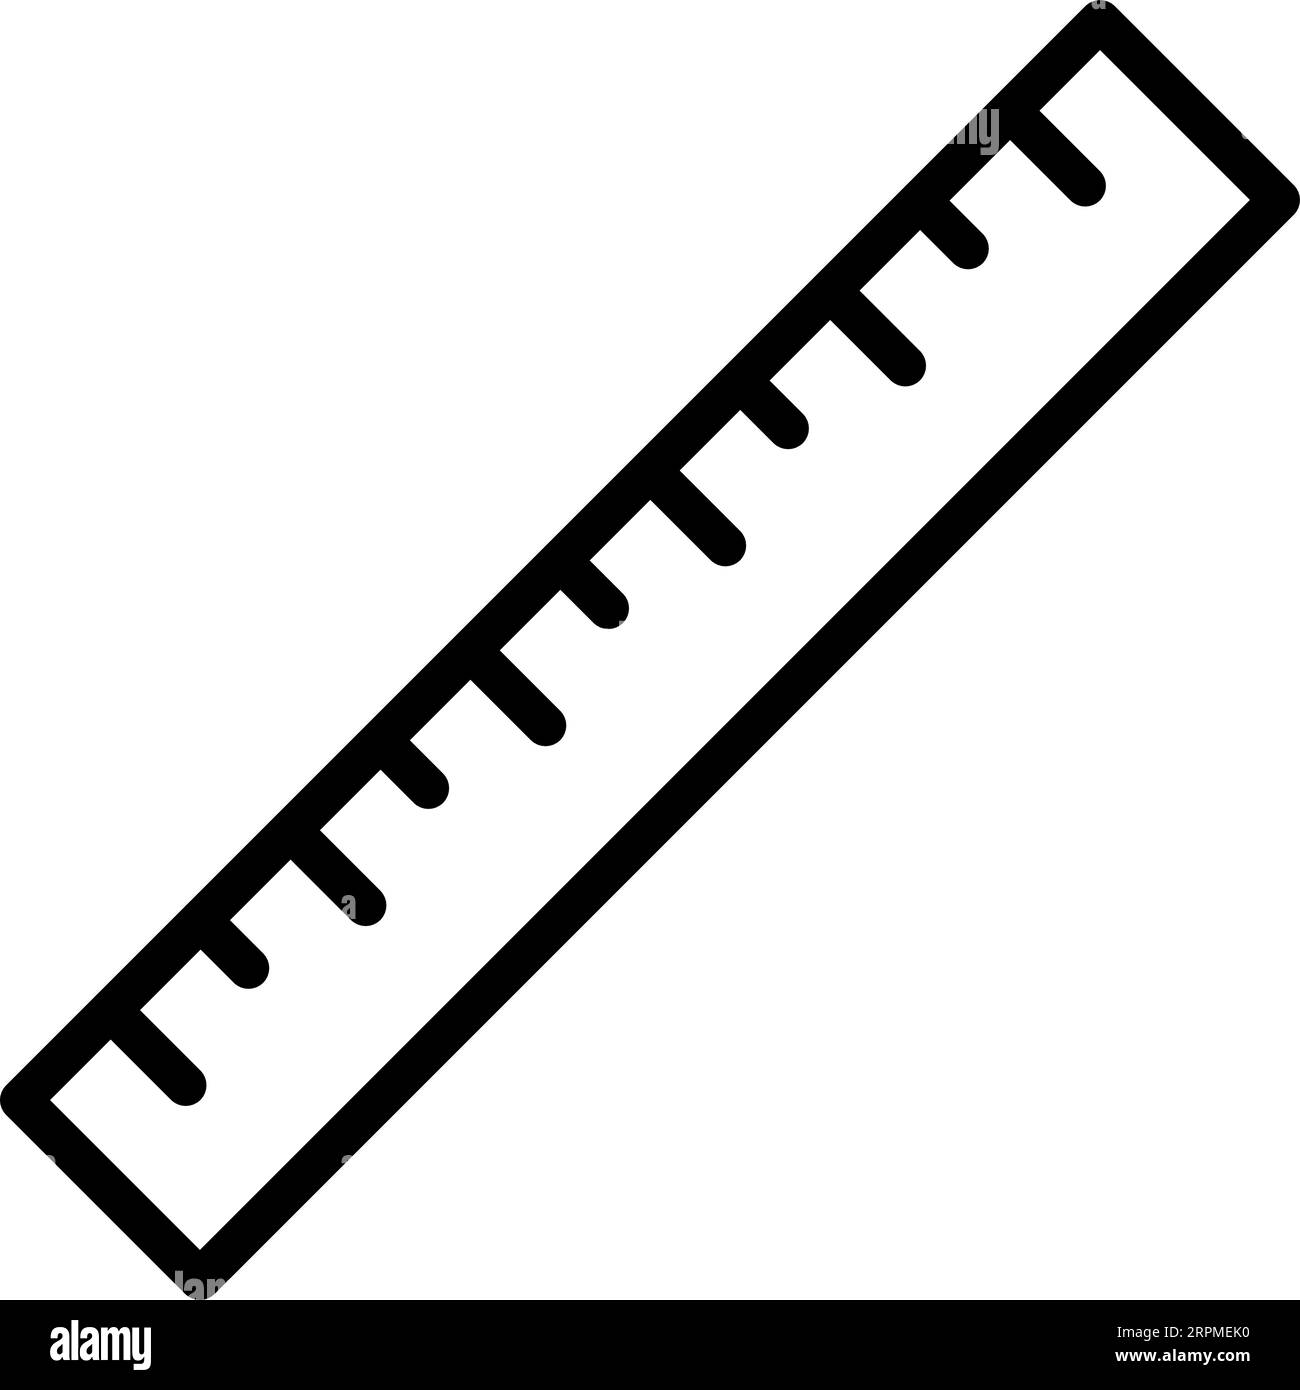 Line ruler icon as an editable outline for web design Stock Vector